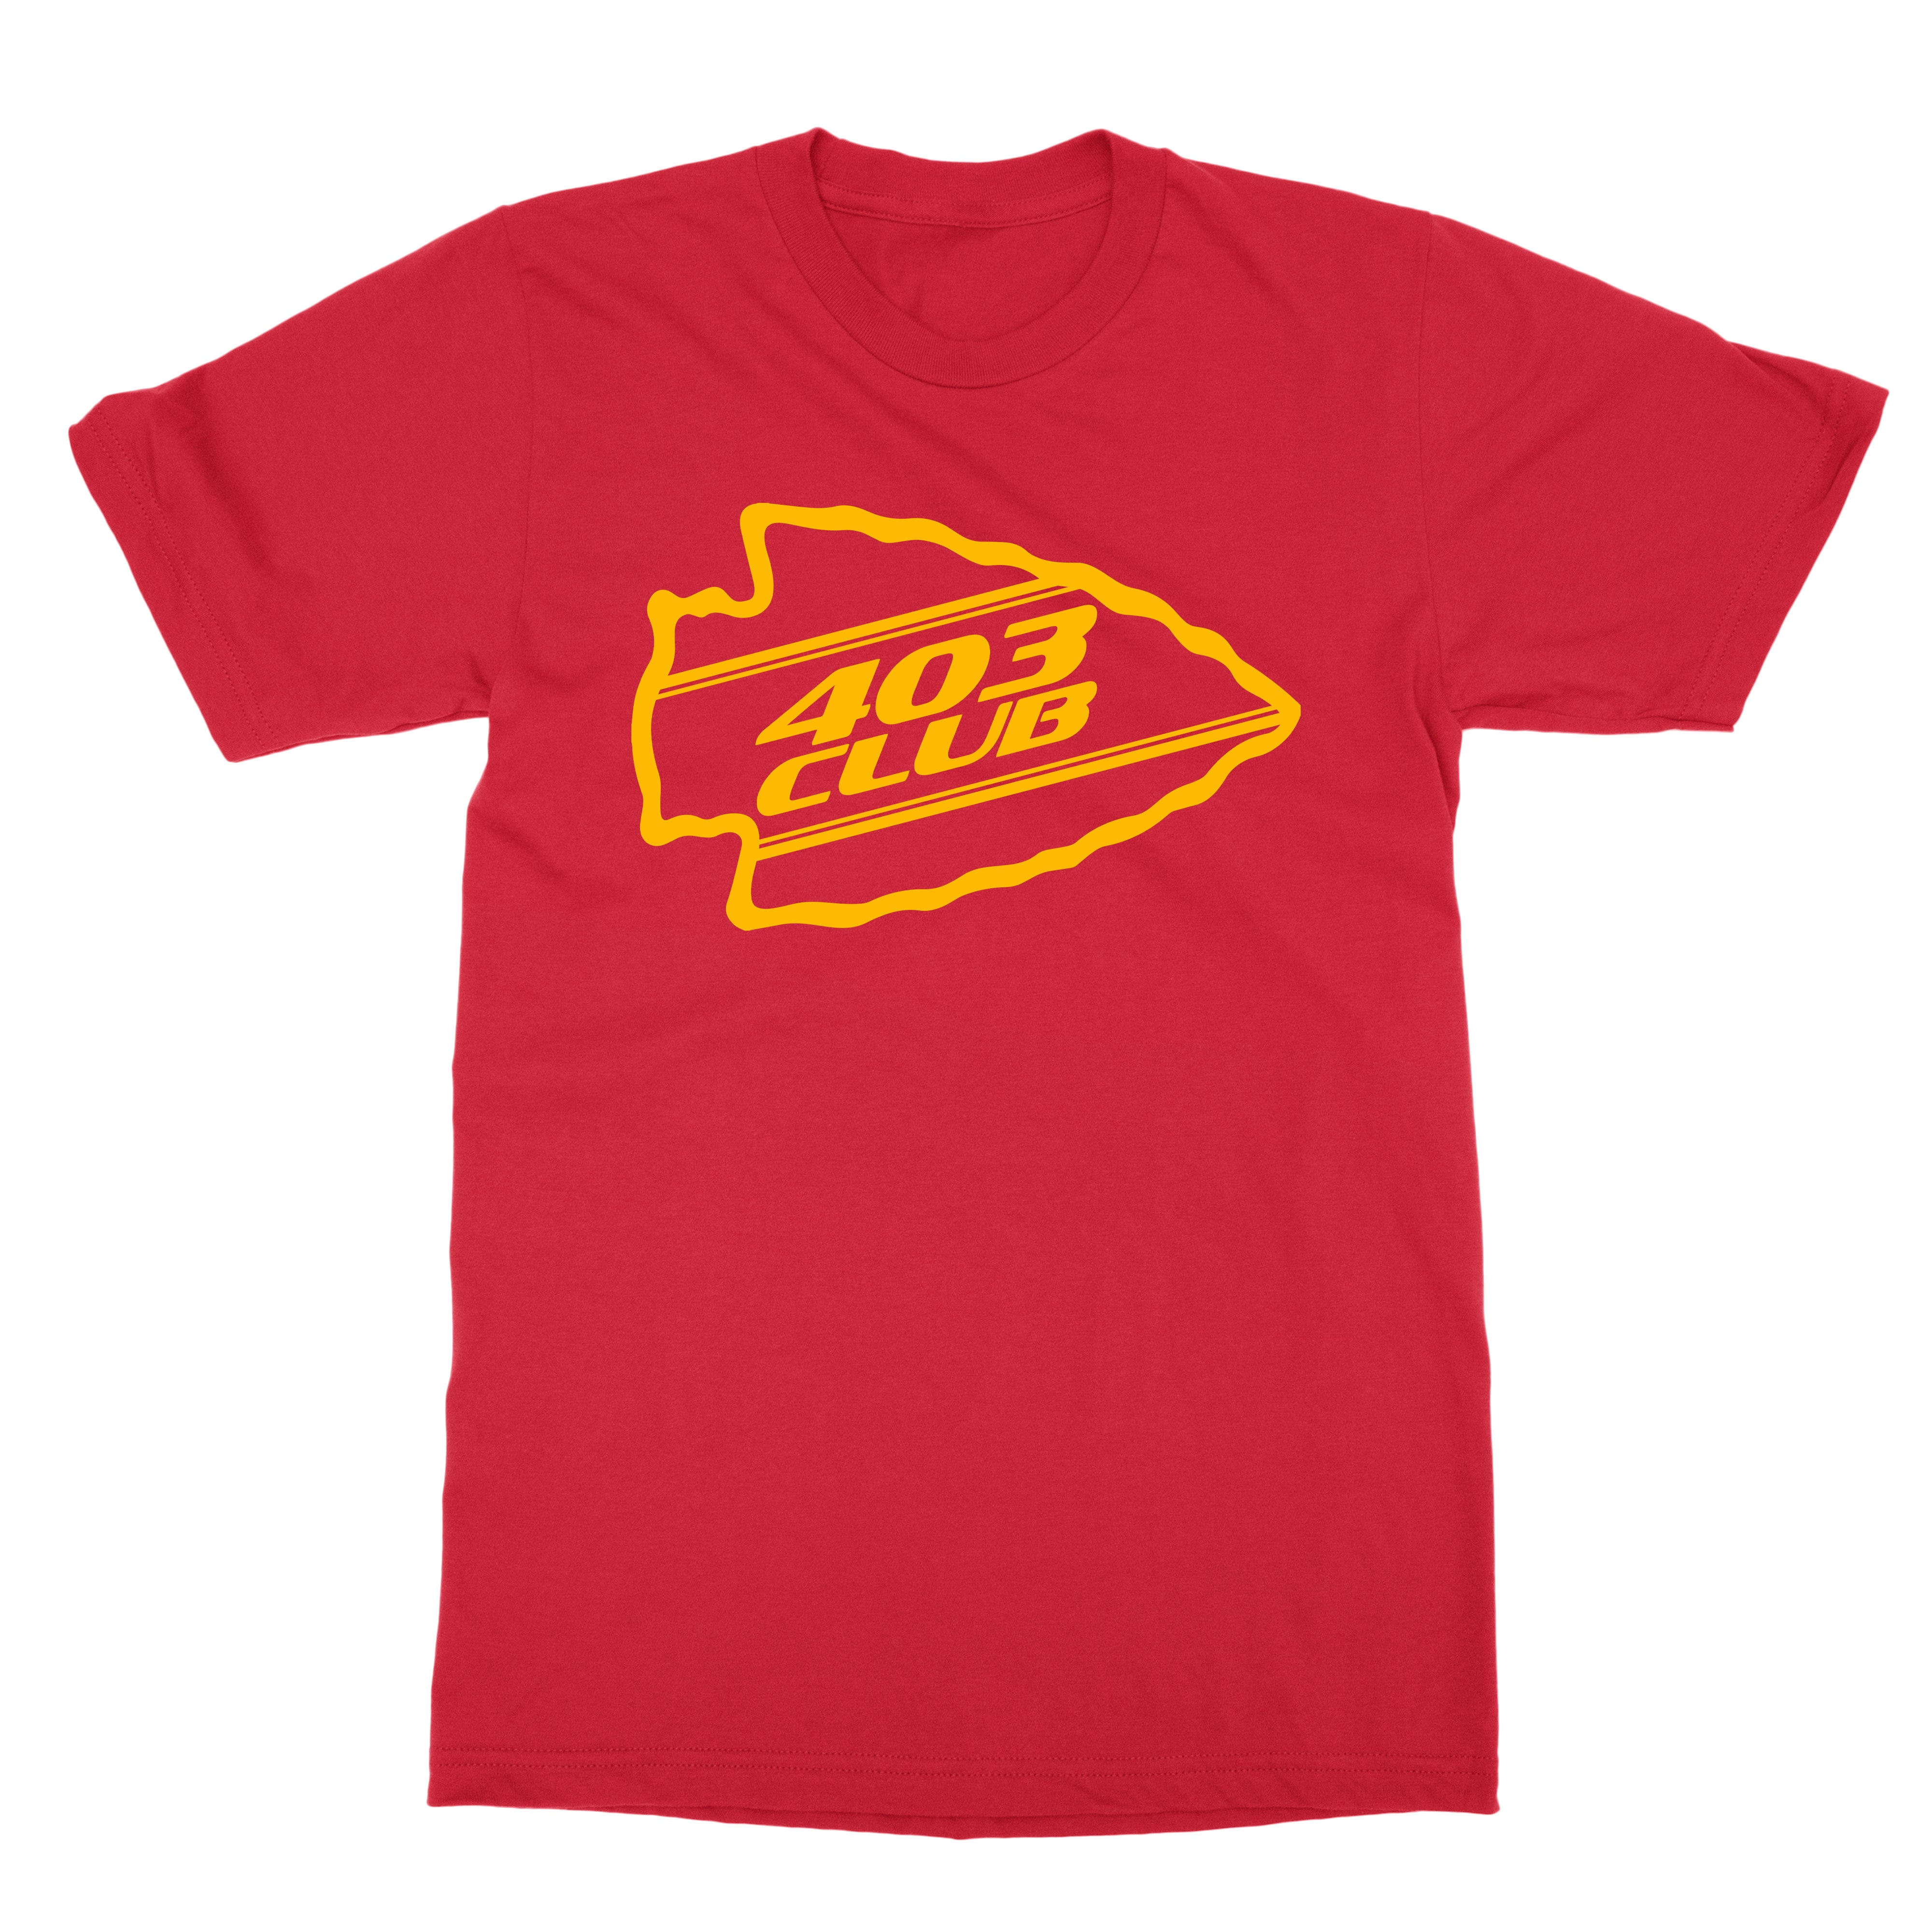 403 Club | Arrowhead T-Shirt